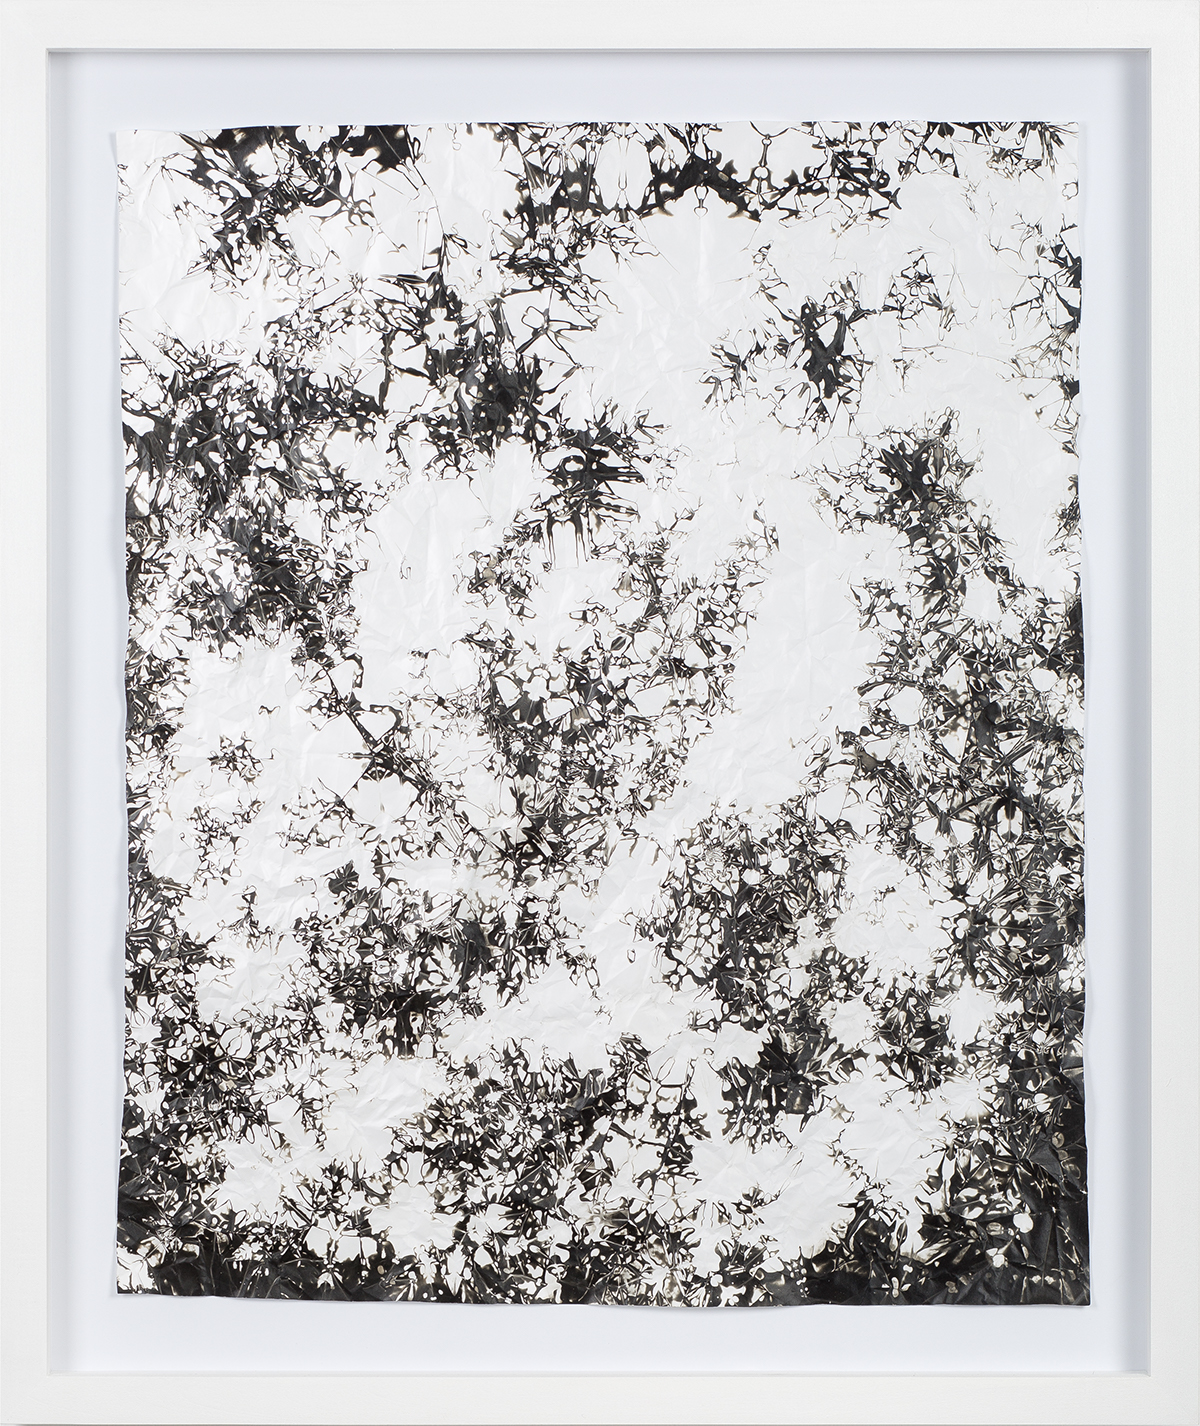 Simon Hantaï chemogram black and white painter hommage pliage concrete photography crease photo paper light developer monochrome